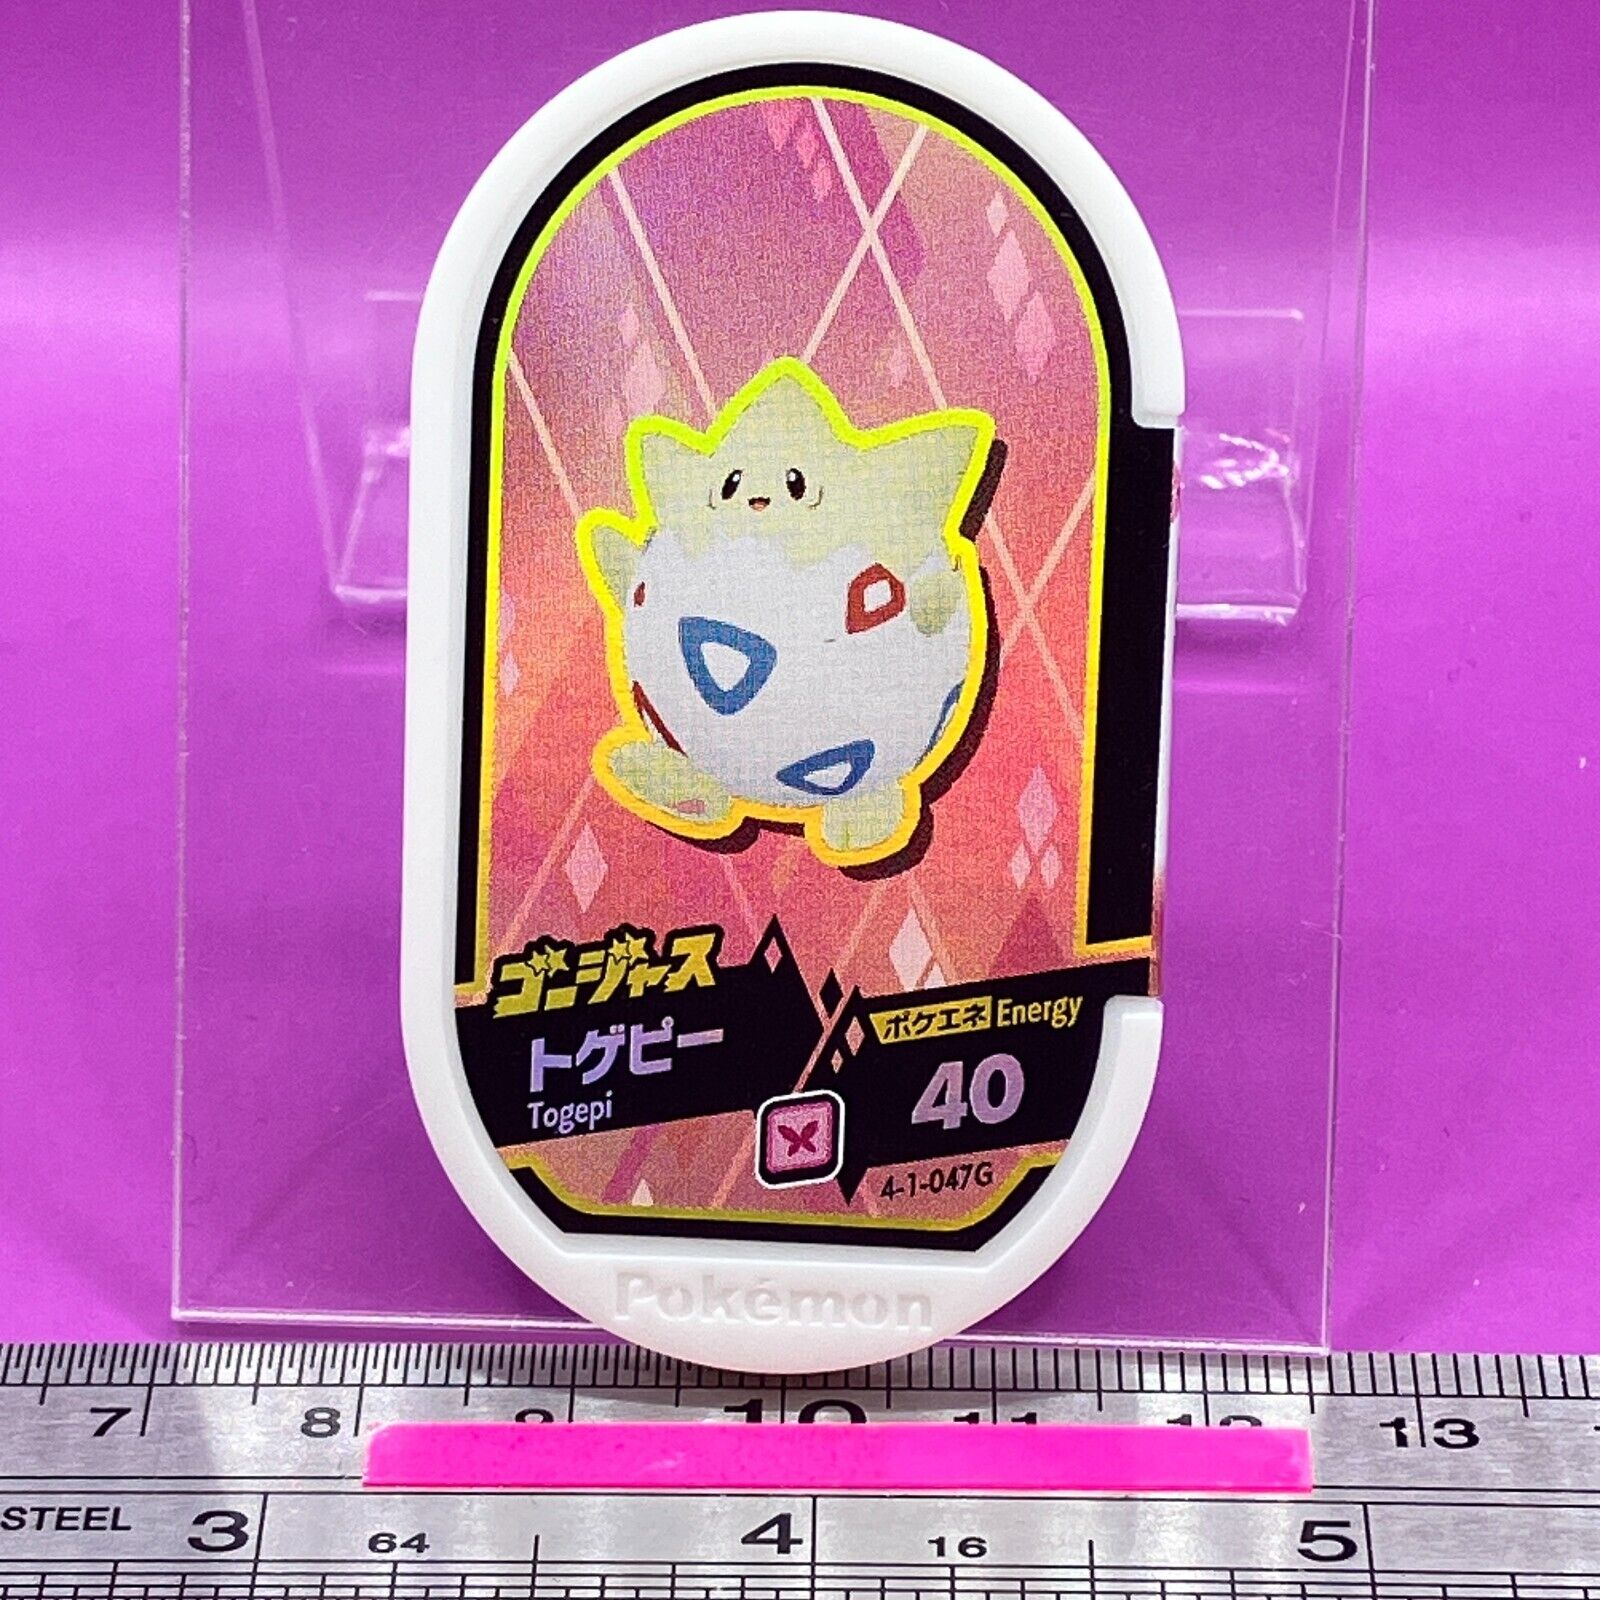 Togepi Pokemon Mezastar Card Token Tag 4-1-047G Energy 40 Mezasuta Japan #275